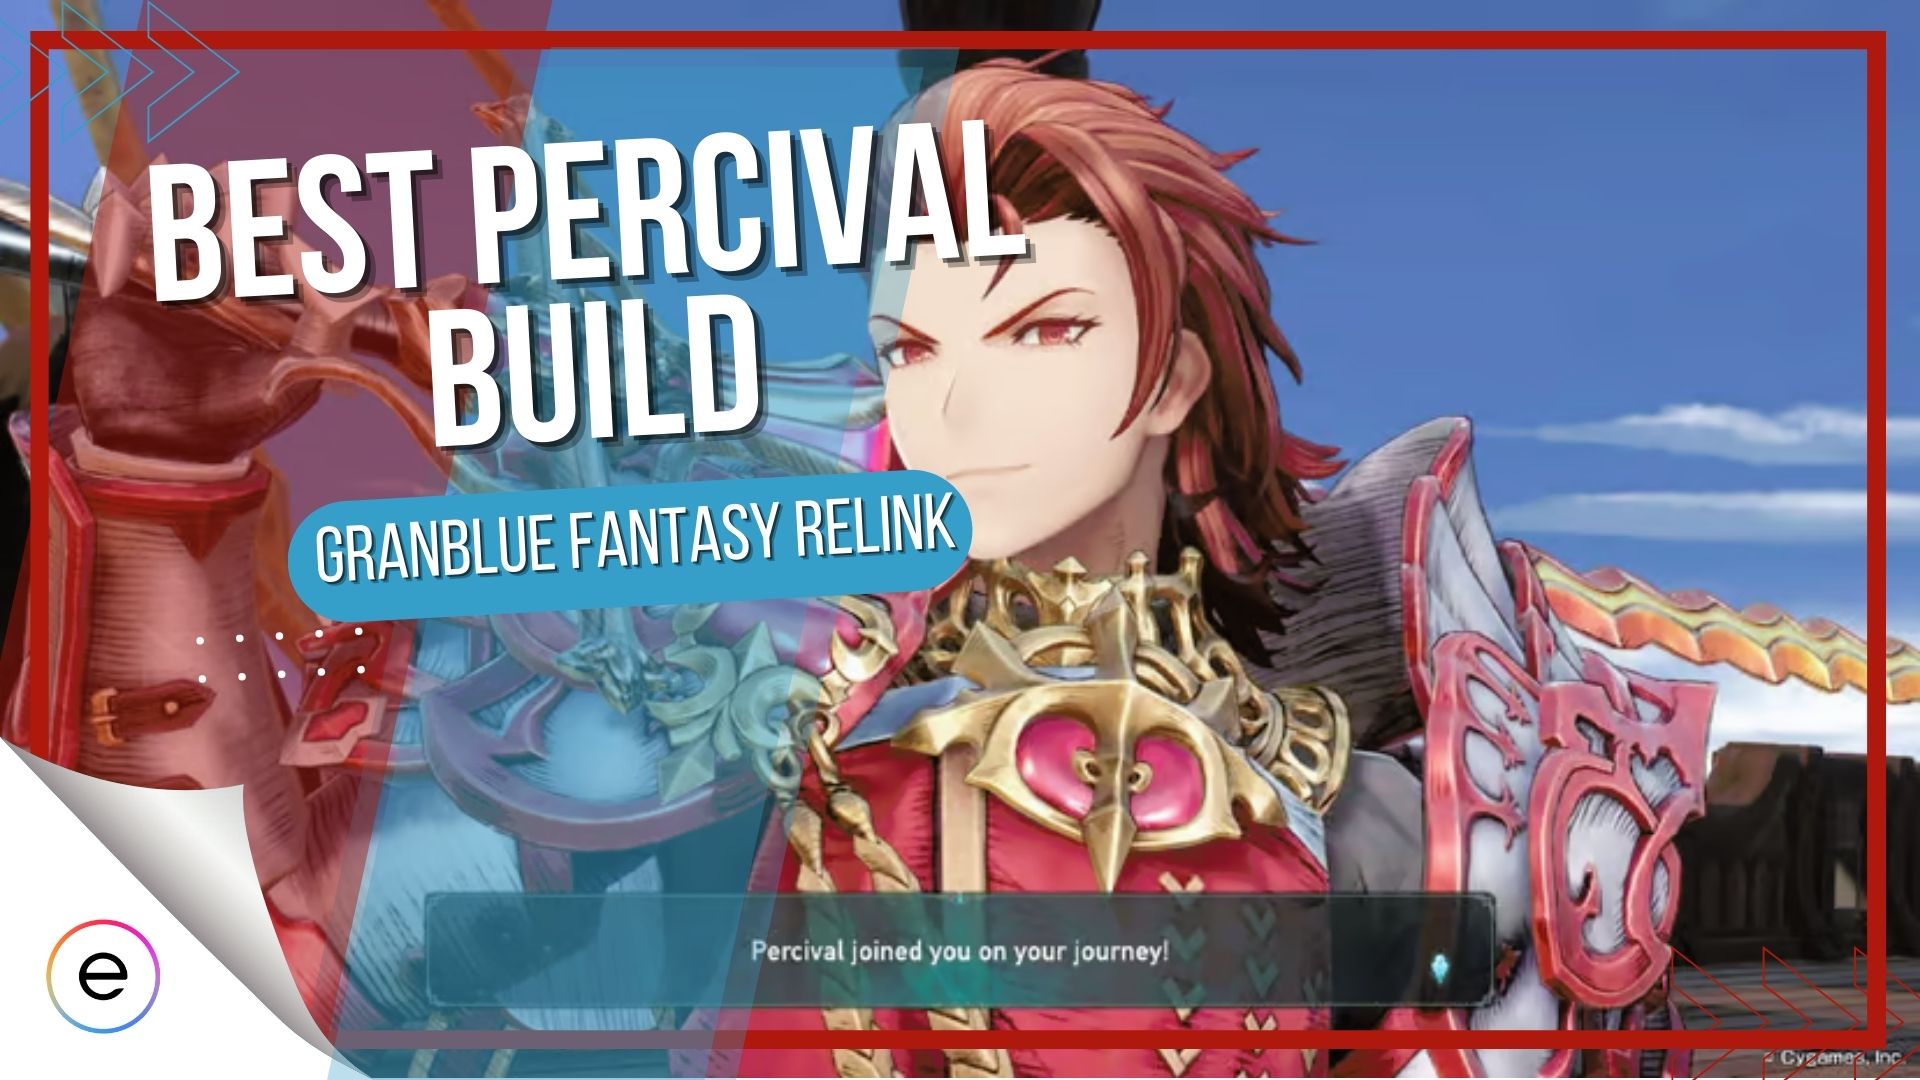 Best Percival Build In Granblue Fantasy Relink